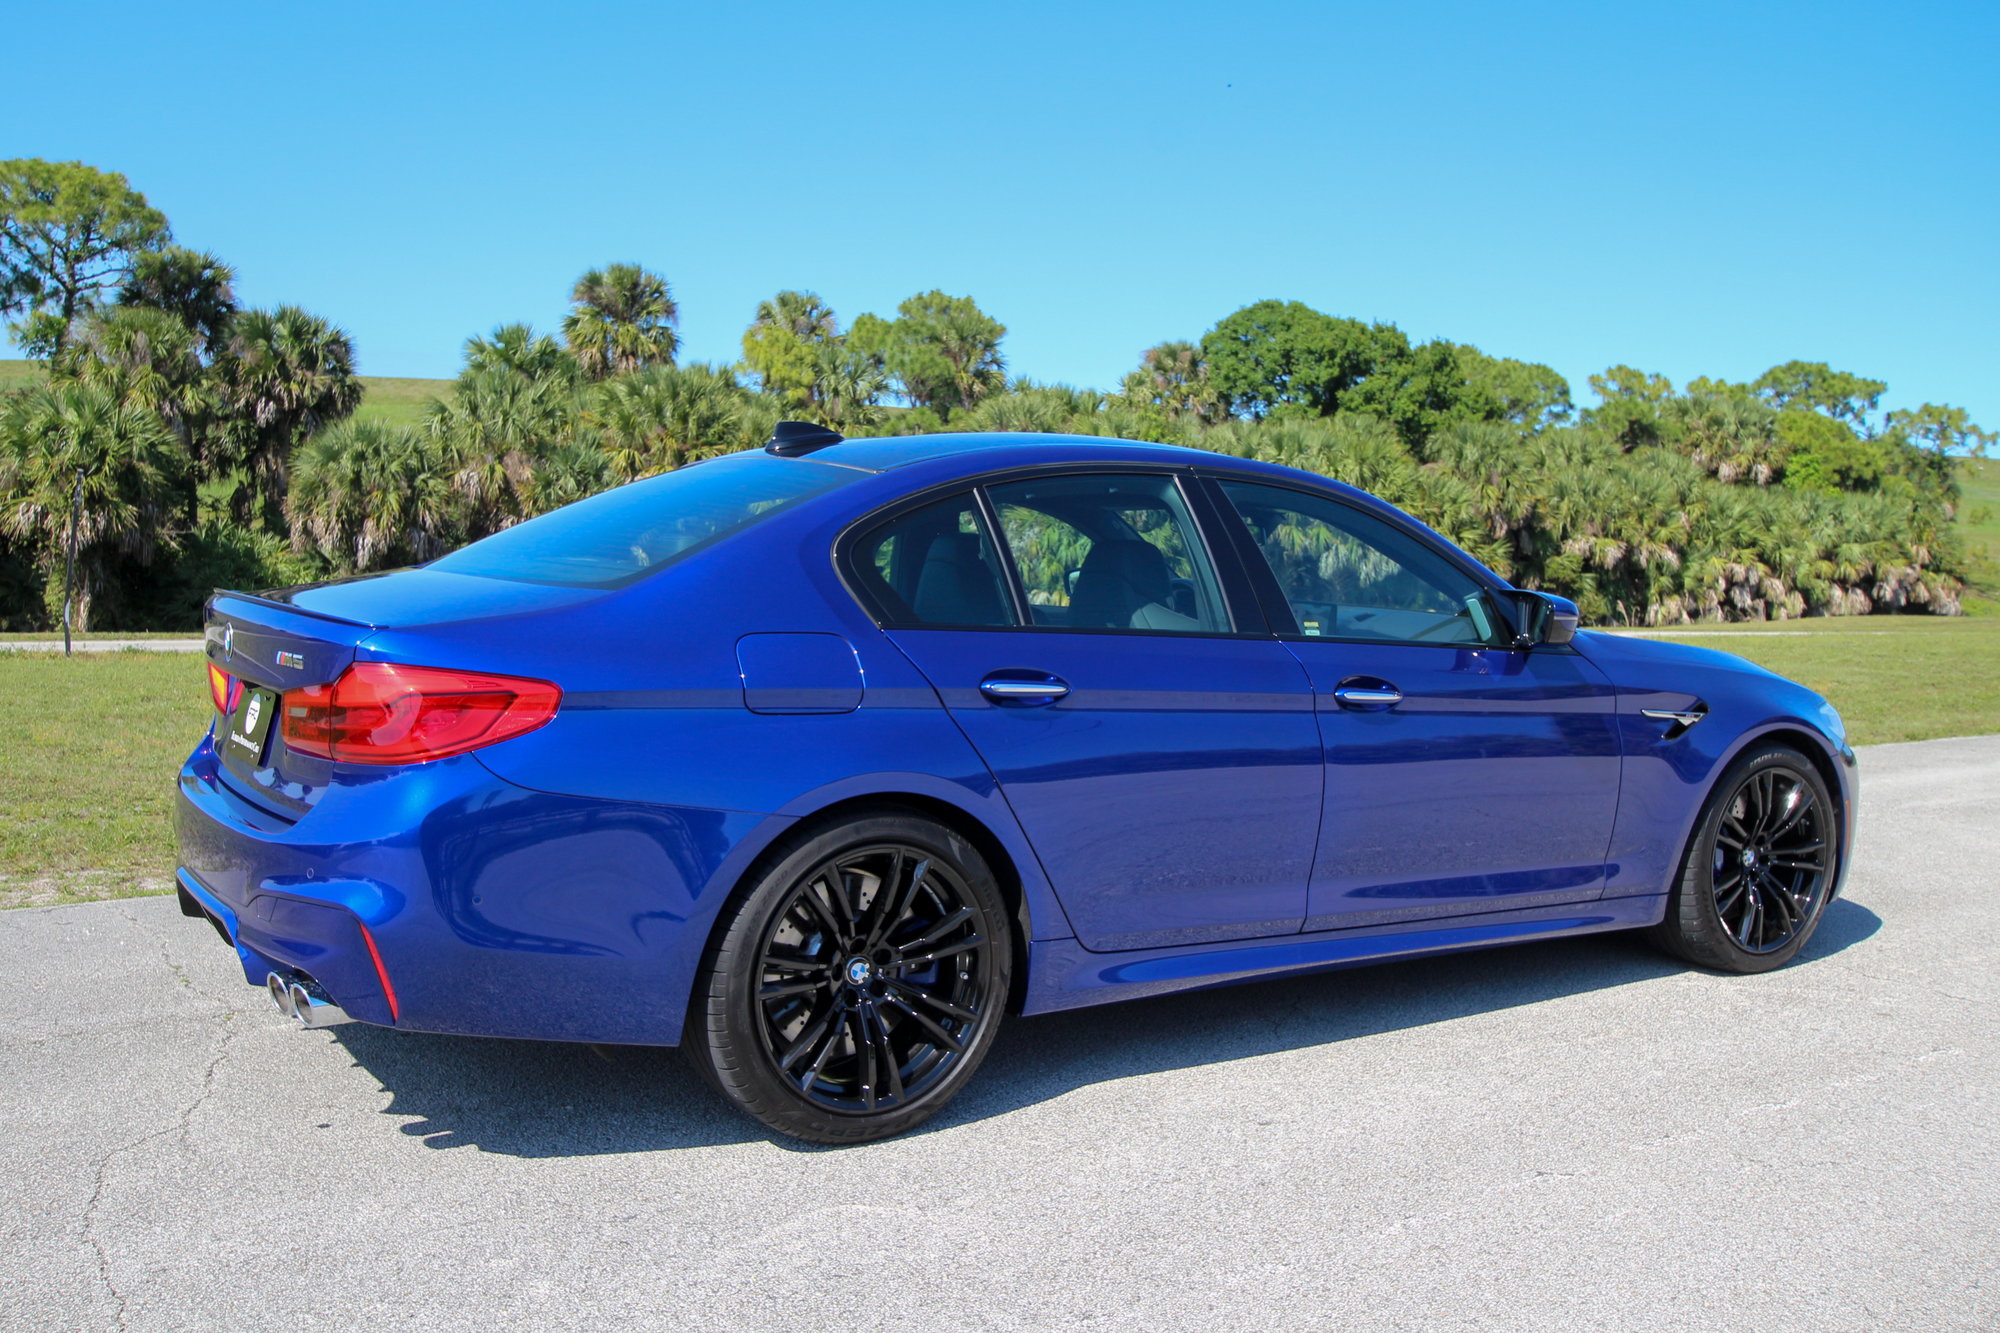 2018 BMW M5 - 2018 BMW M5 in Marina Bay Blue Metallic w/ Executive Pkg - Used - VIN WBSJF0C51JG577499 - 8,832 Miles - 8 cyl - AWD - Automatic - Sedan - Blue - Riviera Beach, FL 33407, United States